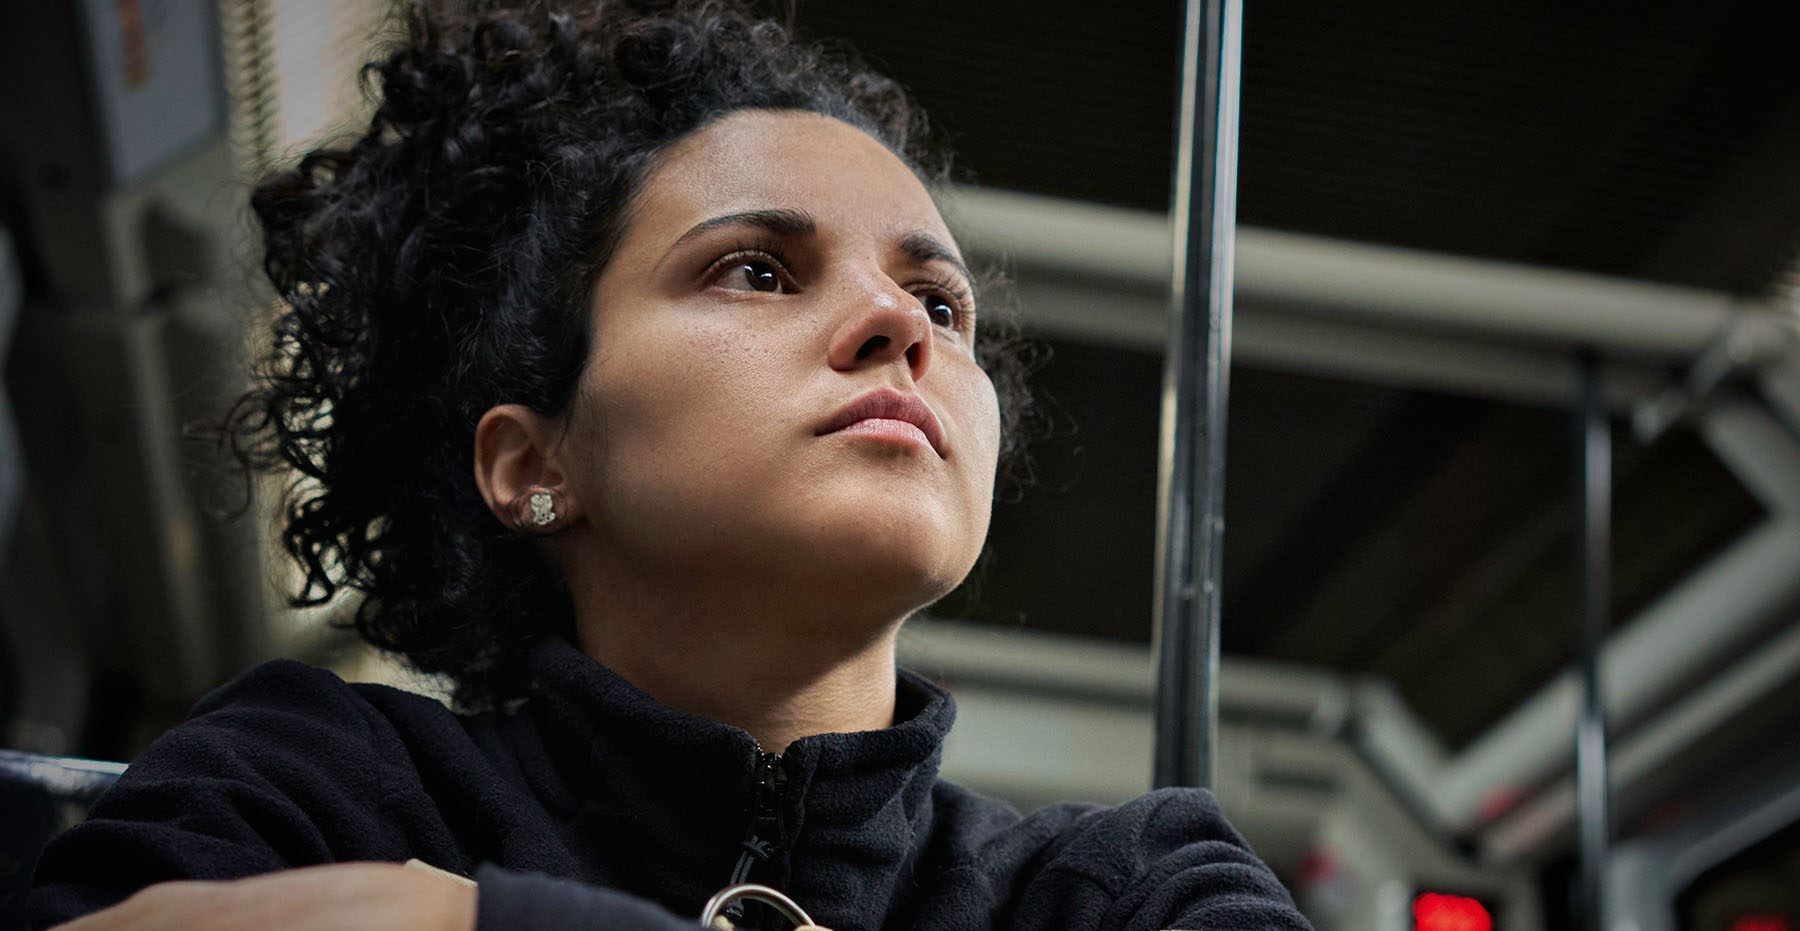 Young Hispanic woman looks anxious on metro rail car.